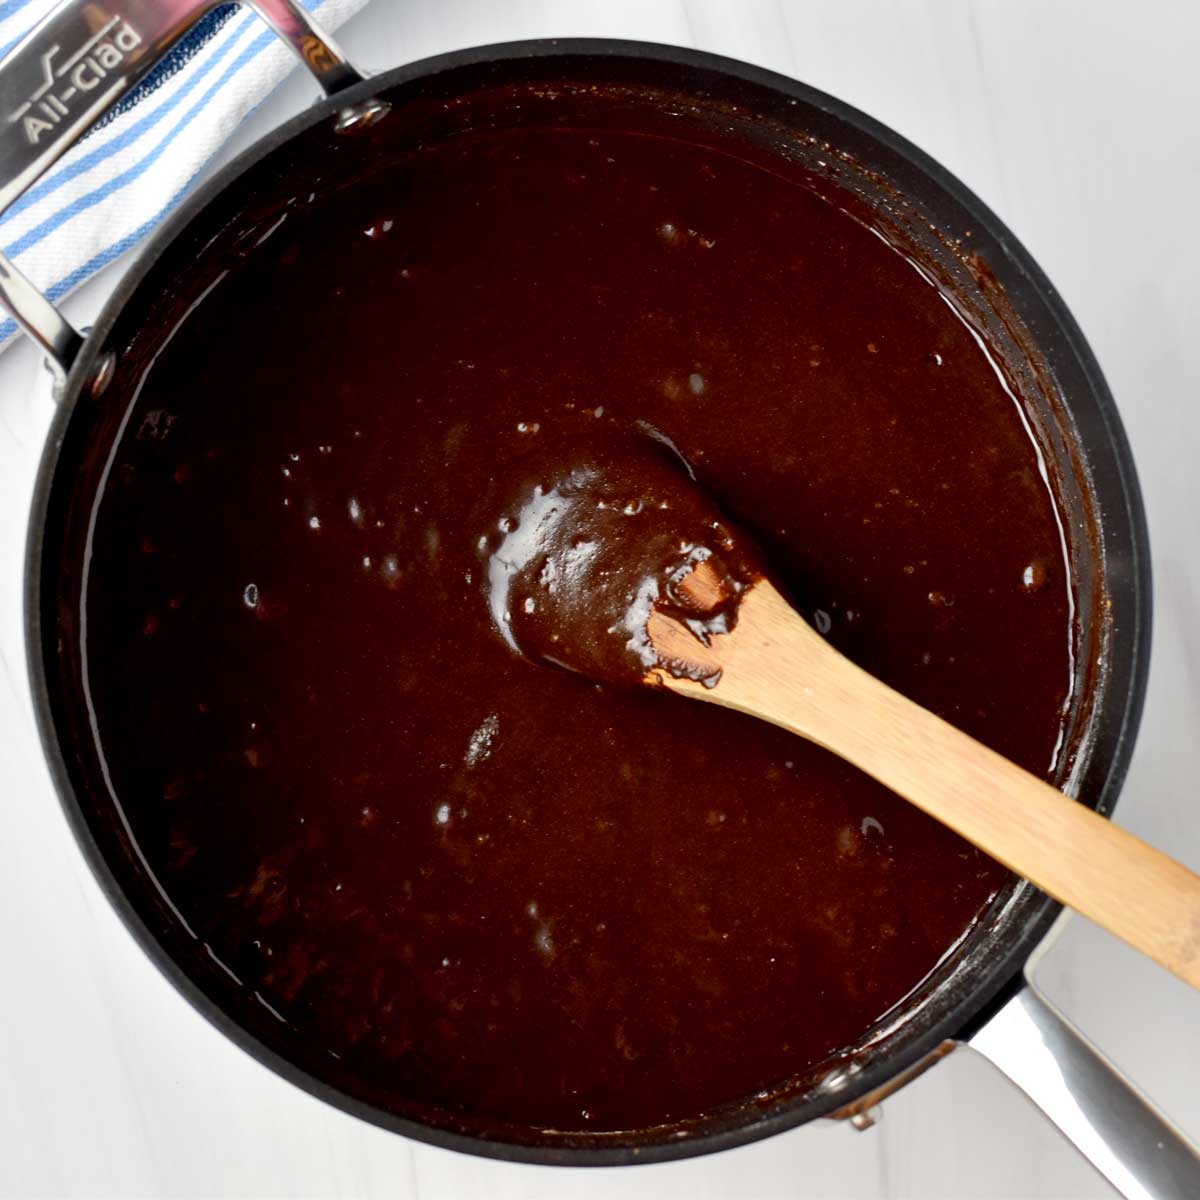 Brownie batter and wooden spoon in saucepan.